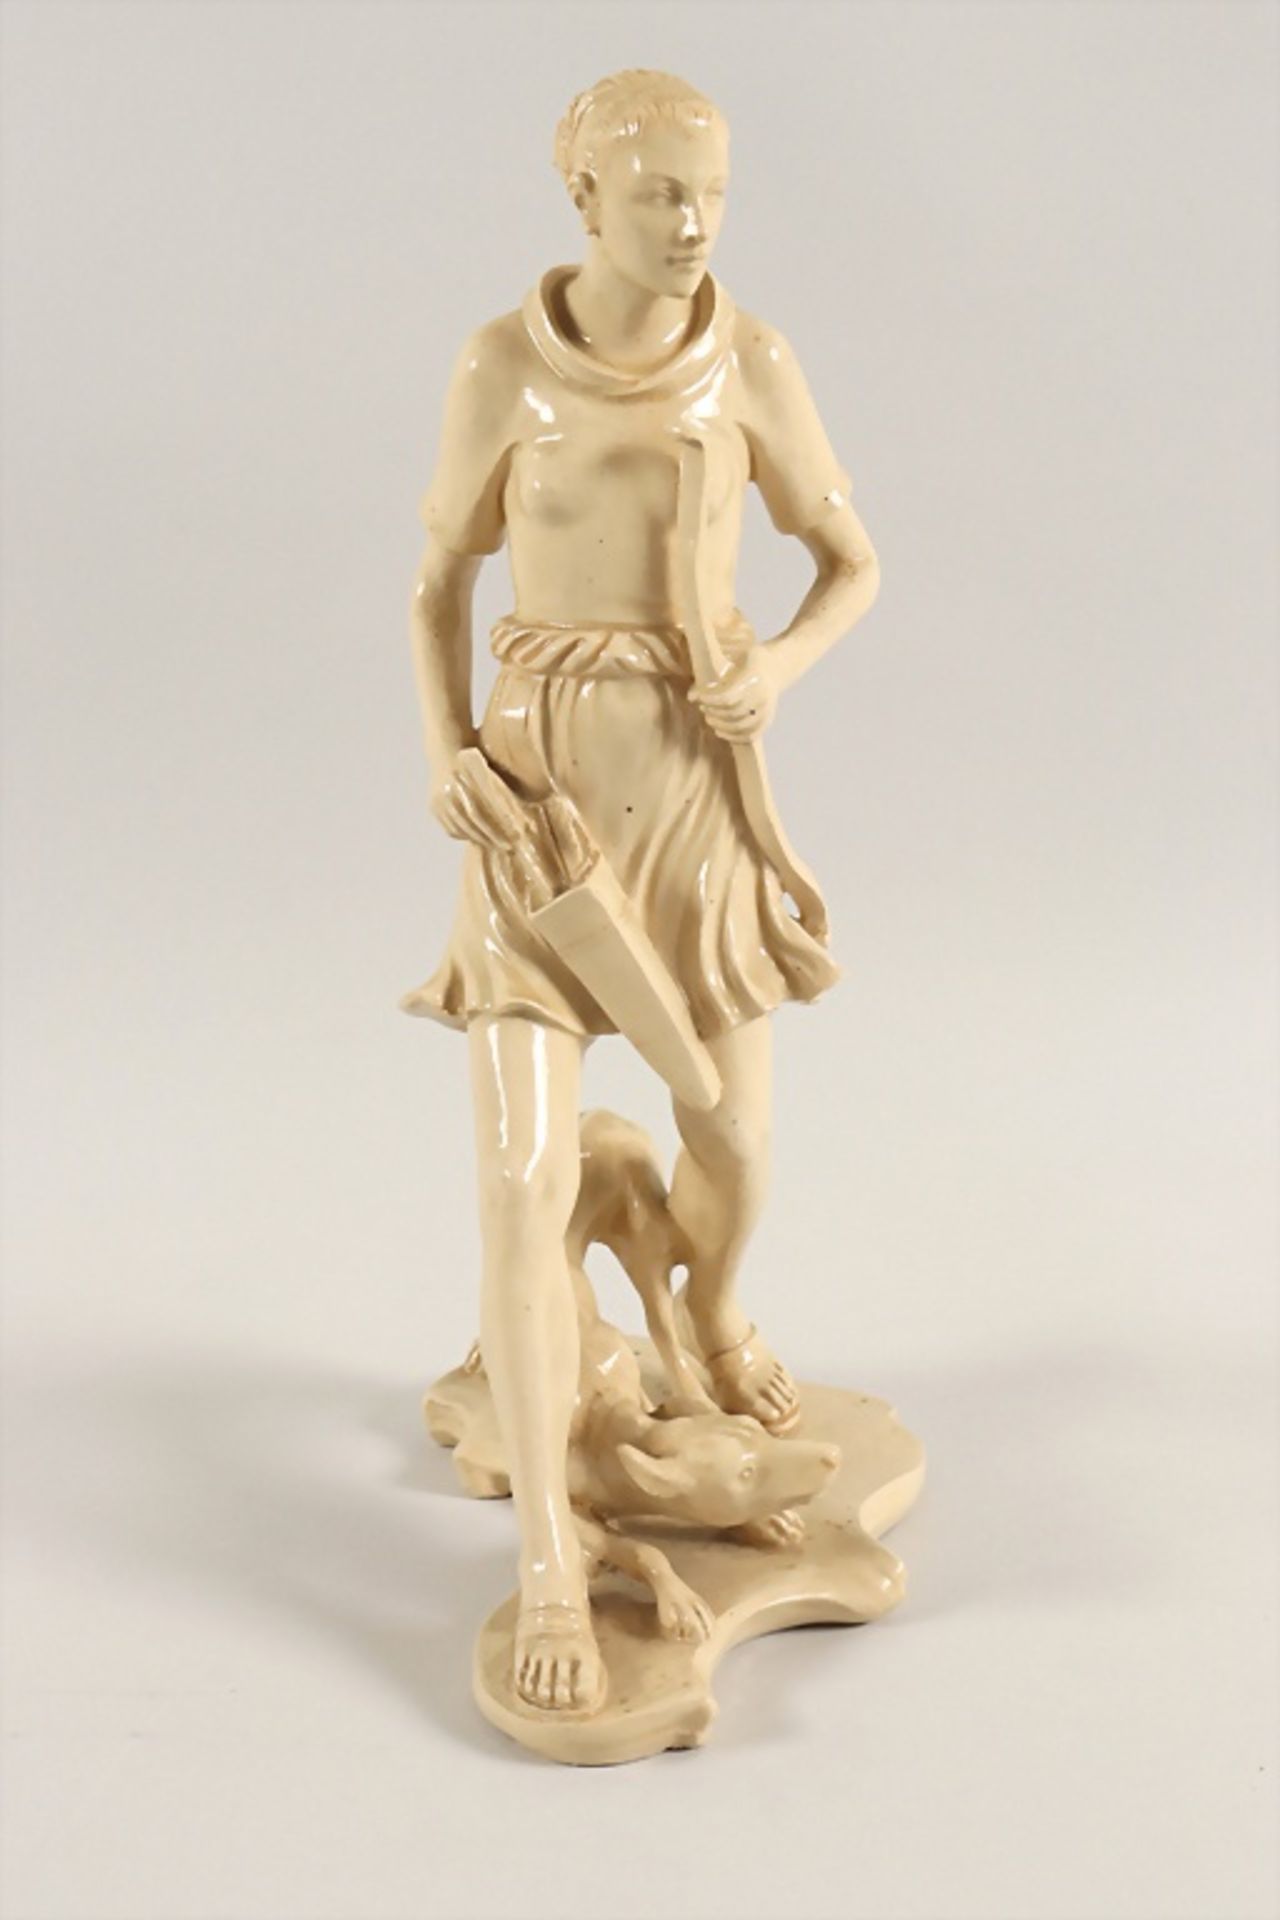 Art Déco Steinzeug Figur 'Diana' / An Art Deco stone ware figure 'Diana', 1946 - Image 2 of 8